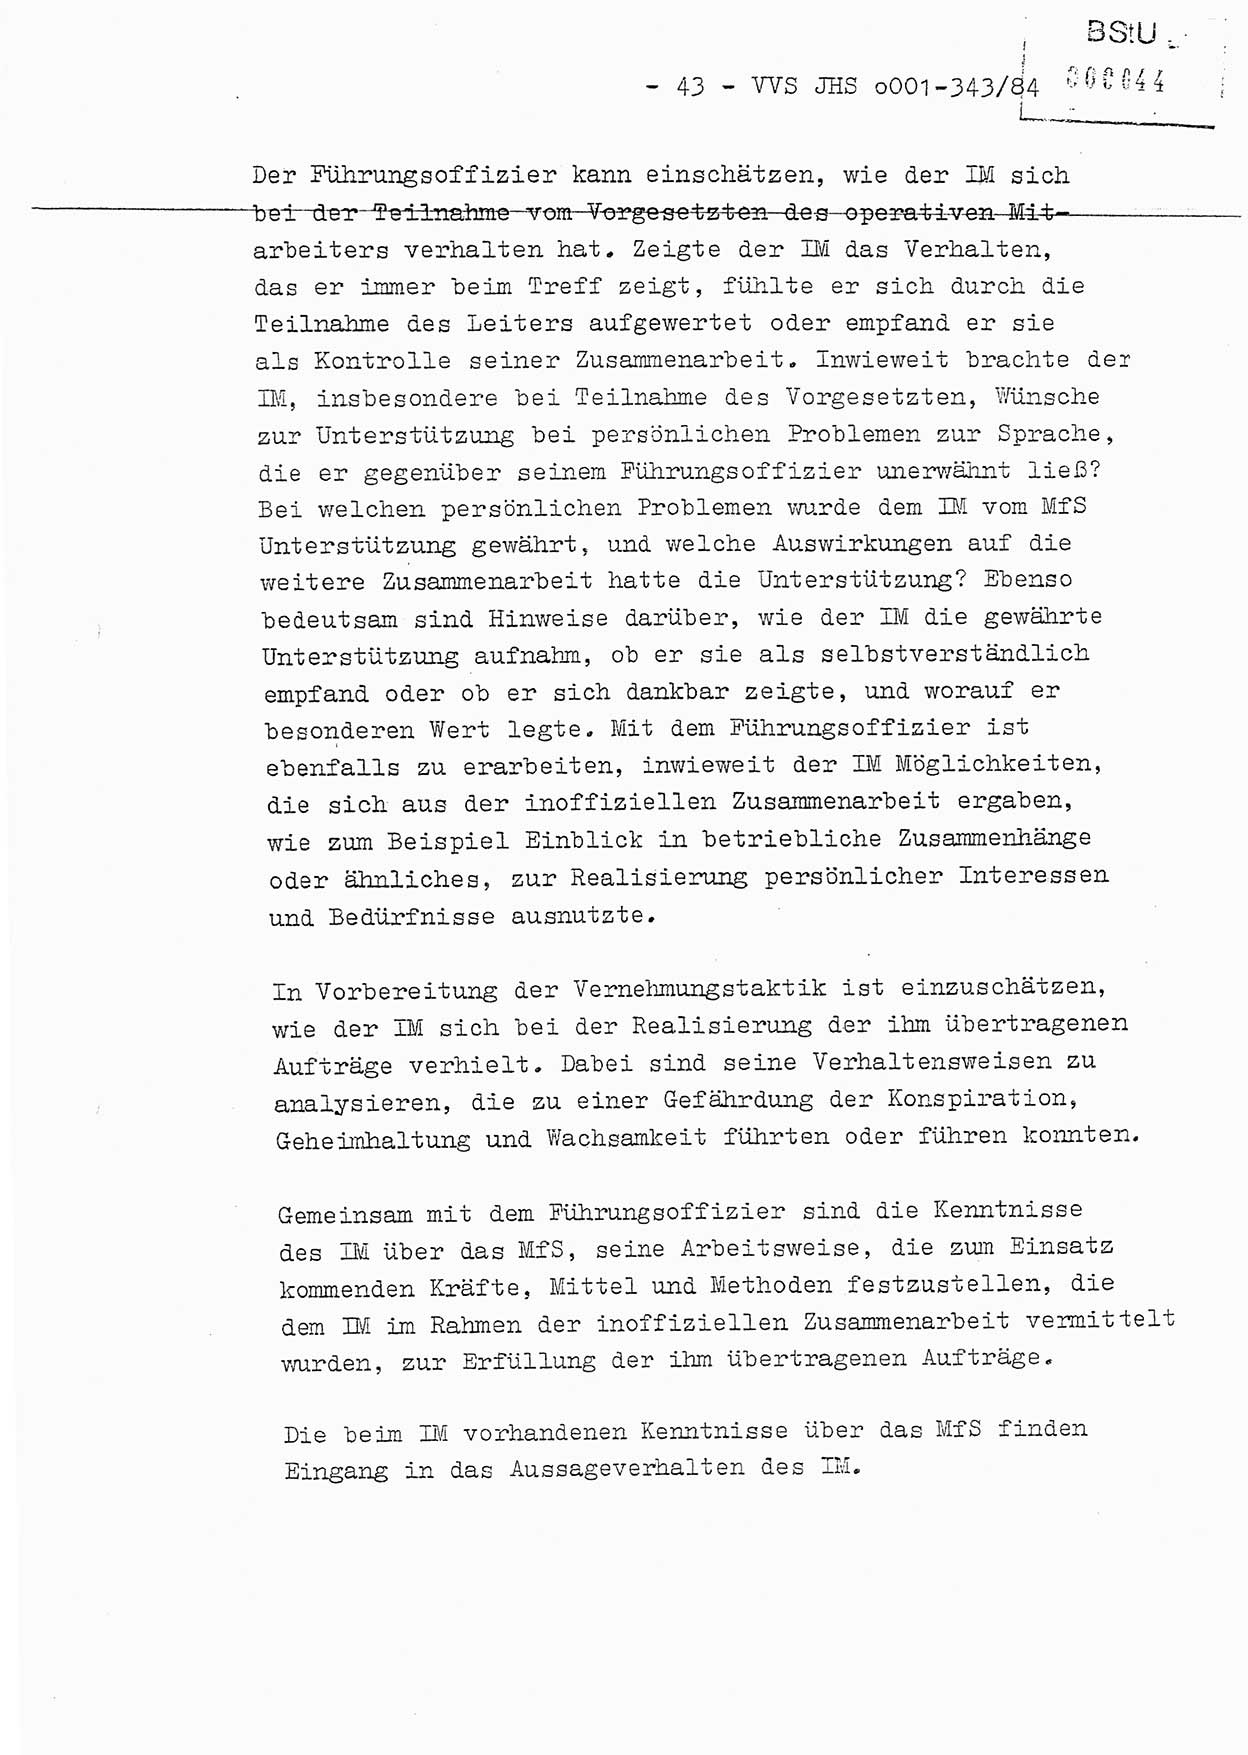 Diplomarbeit, Oberleutnant Bernd Michael (HA Ⅸ/5), Oberleutnant Peter Felber (HA IX/5), Ministerium für Staatssicherheit (MfS) [Deutsche Demokratische Republik (DDR)], Juristische Hochschule (JHS), Vertrauliche Verschlußsache (VVS) o001-343/84, Potsdam 1985, Seite 43 (Dipl.-Arb. MfS DDR JHS VVS o001-343/84 1985, S. 43)